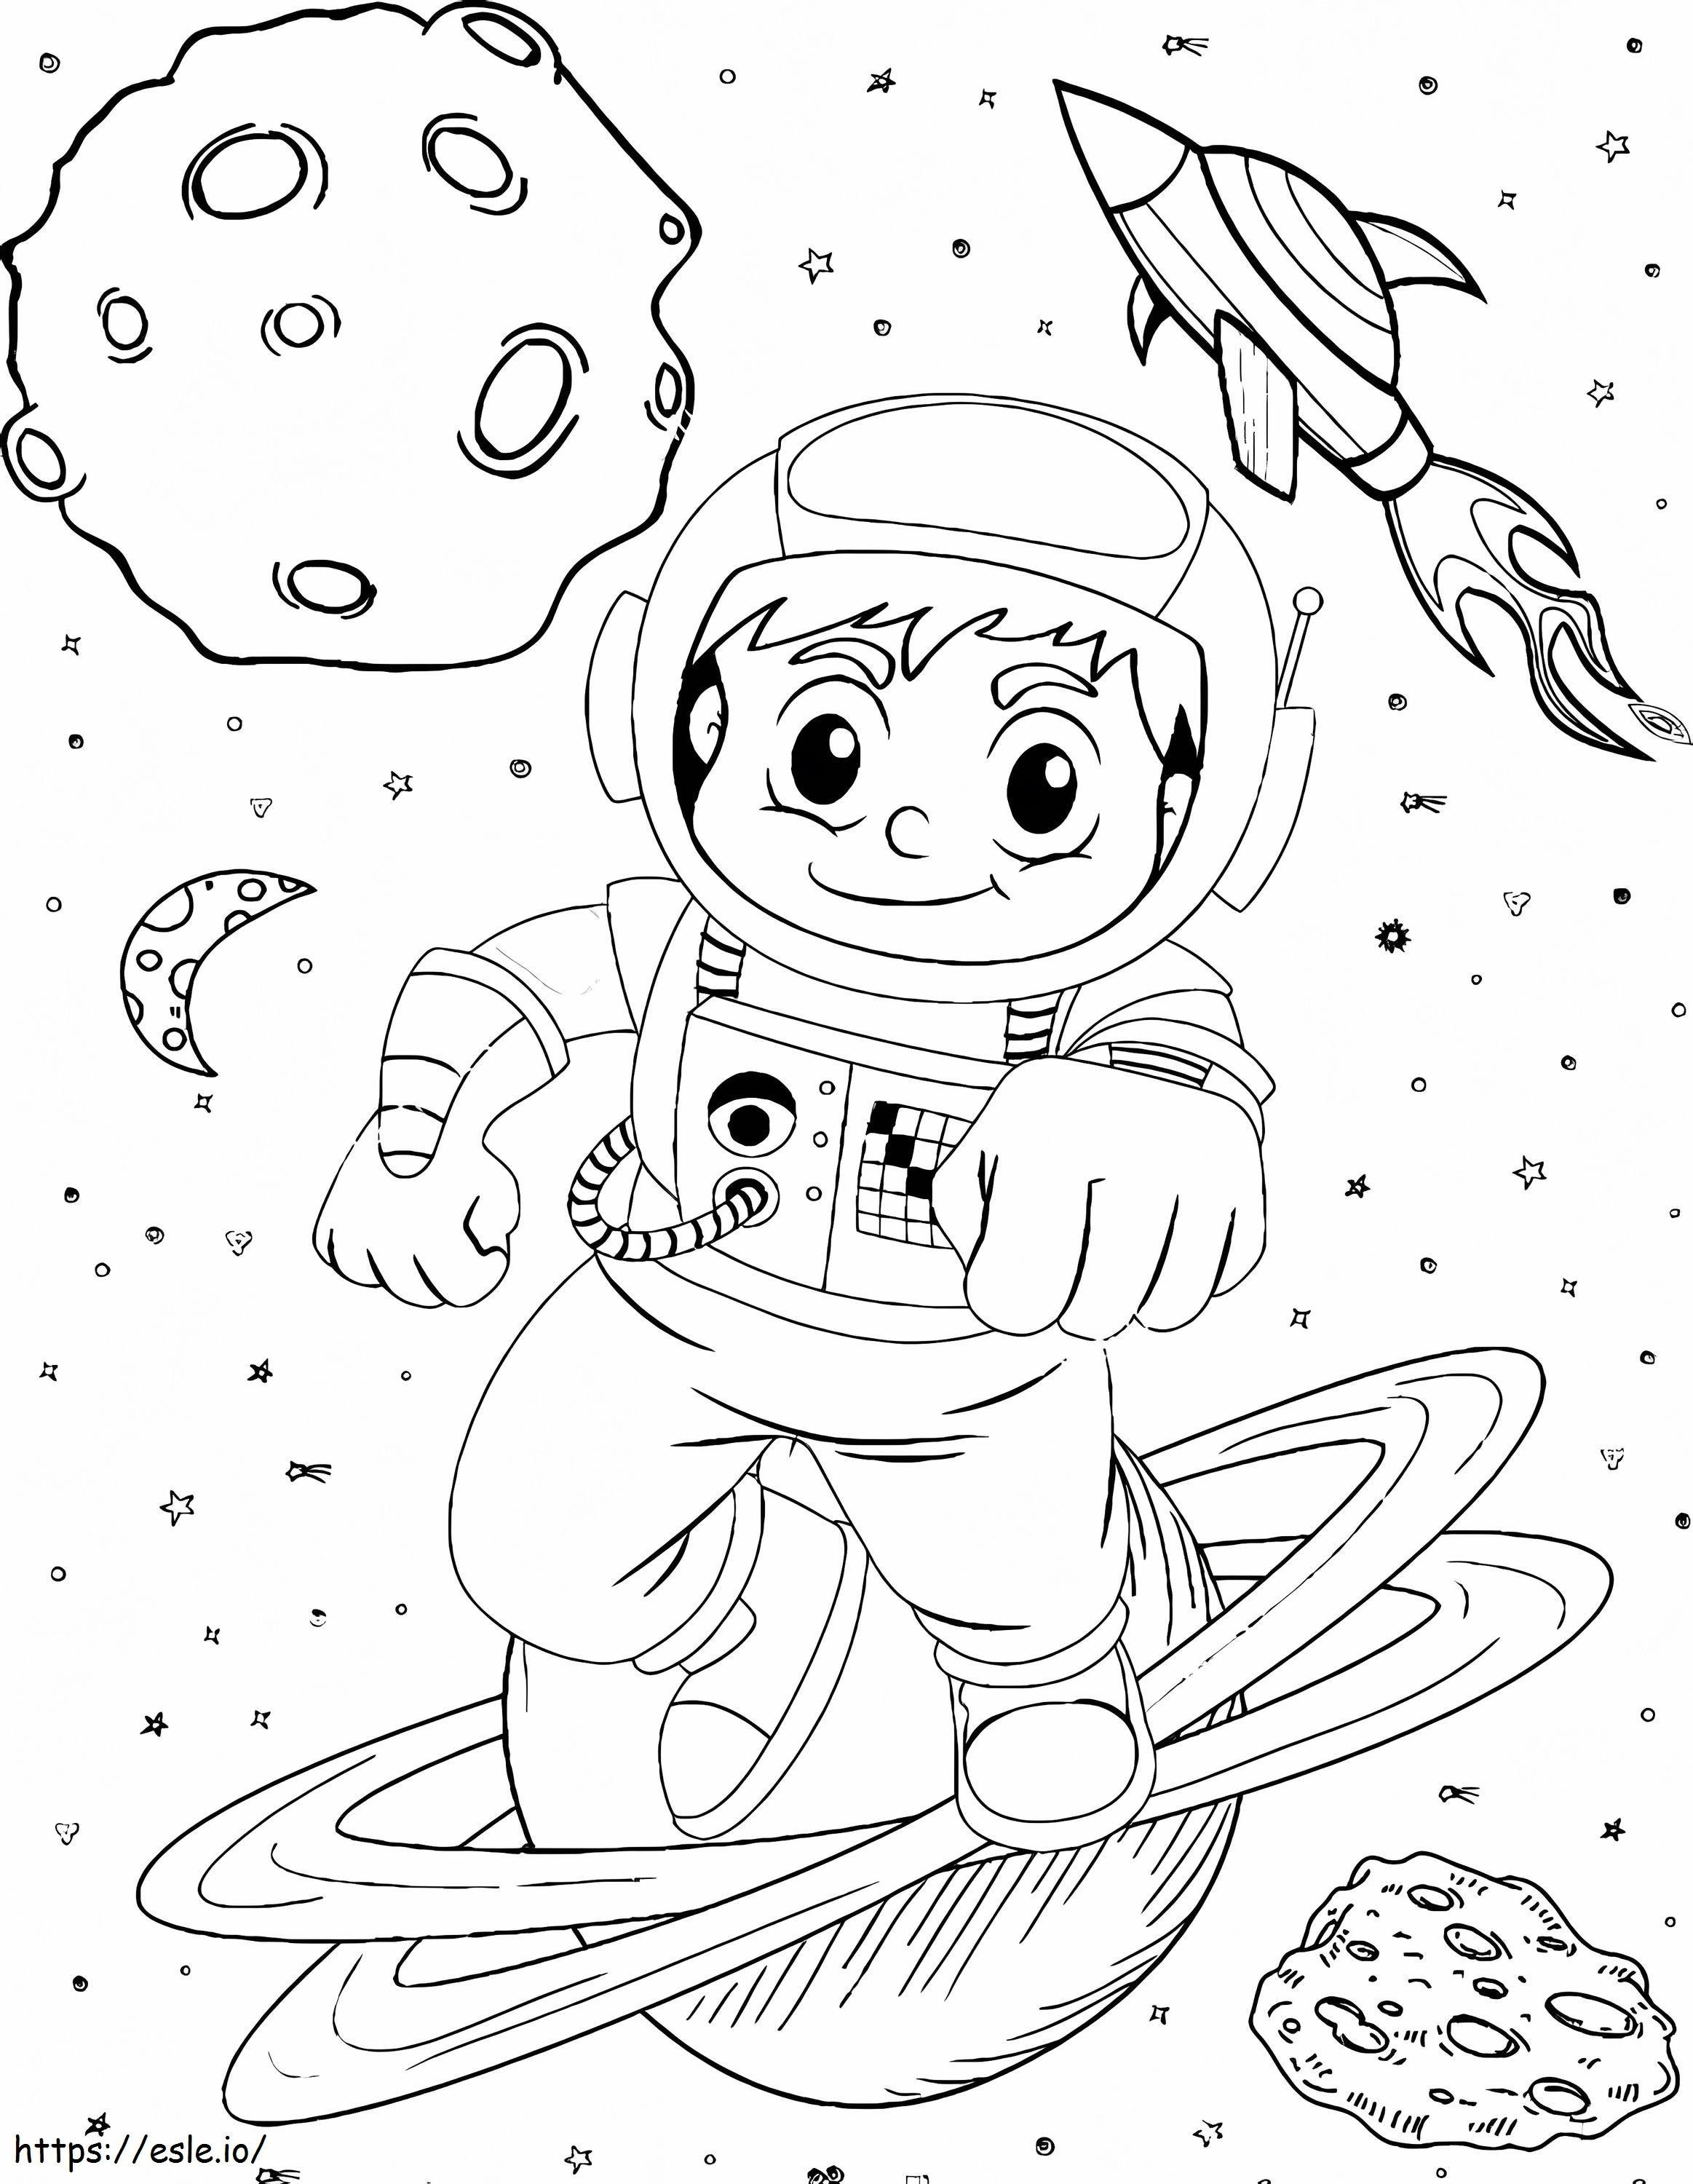 Astronaut Cartoon coloring page